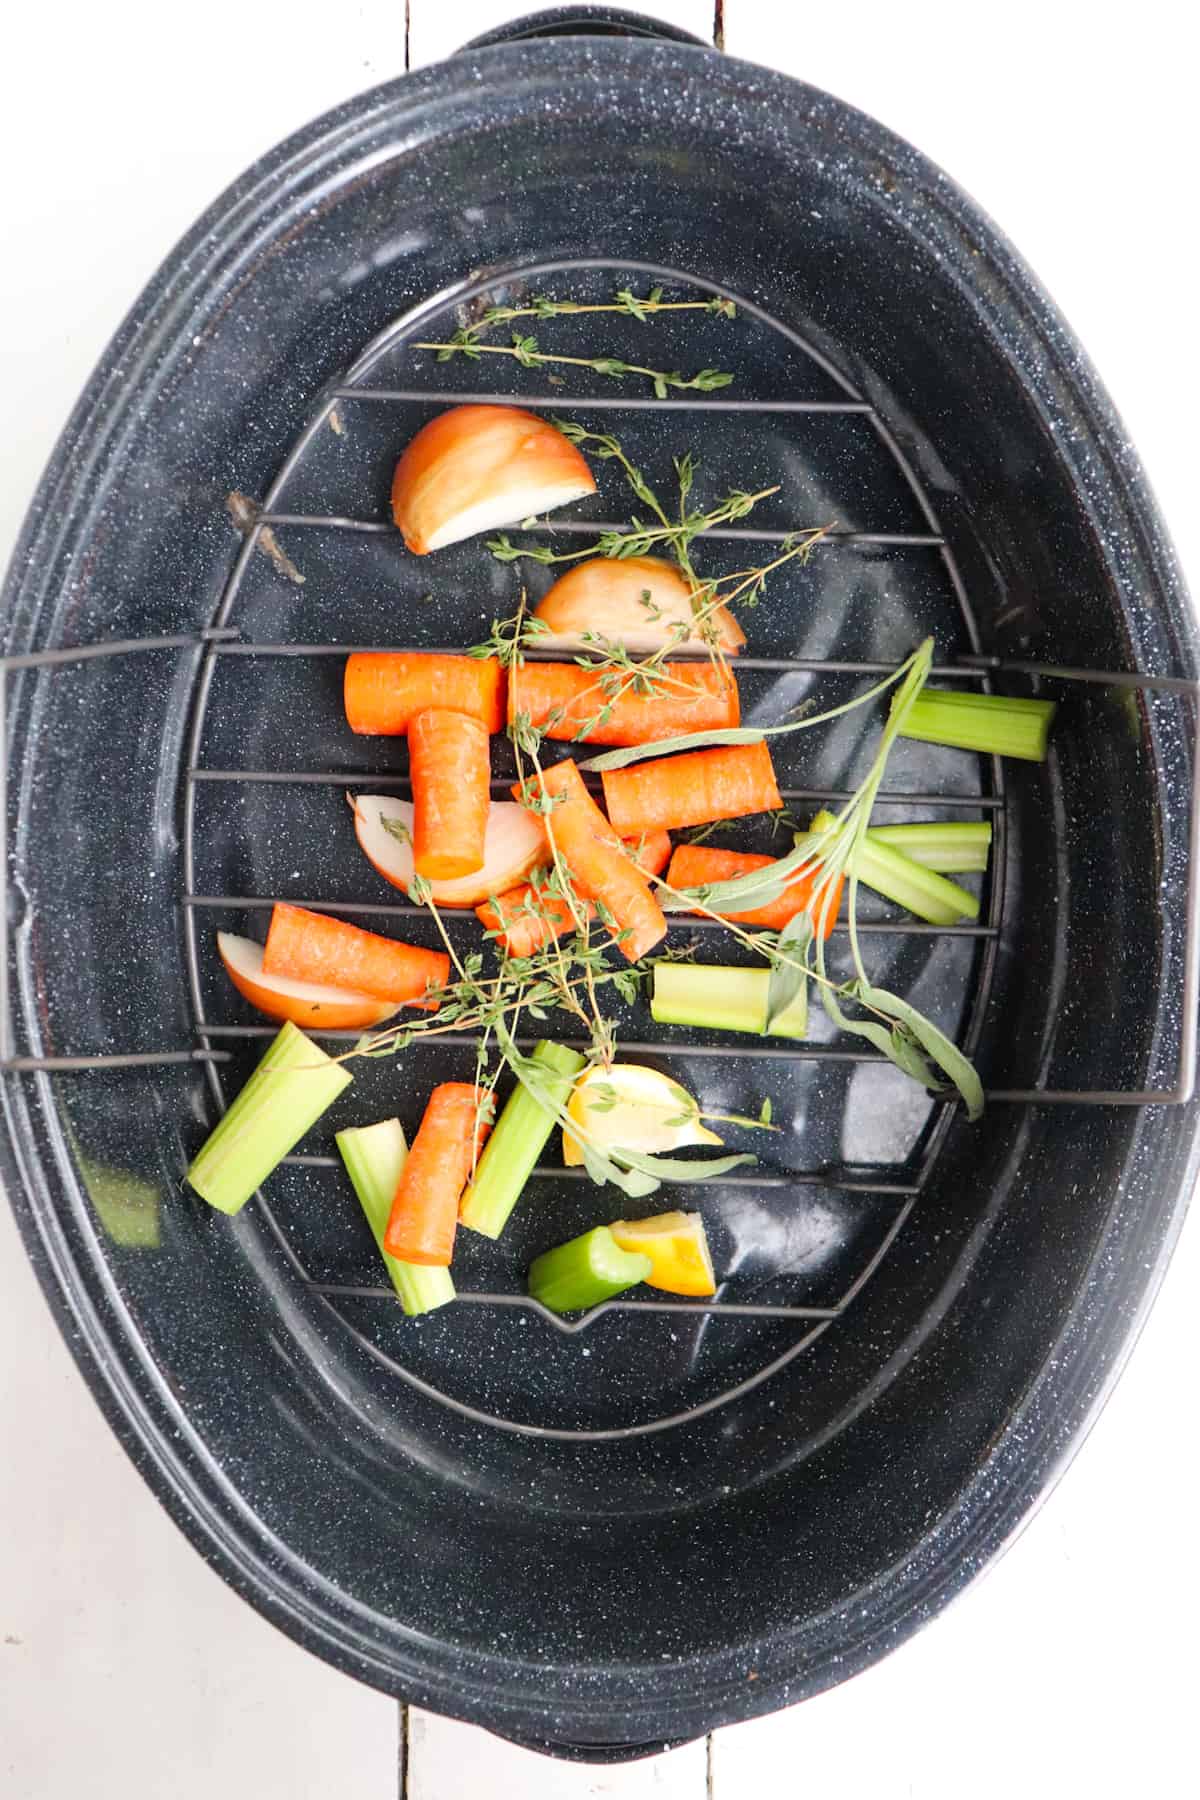 veggie scraps in a roasting pan.